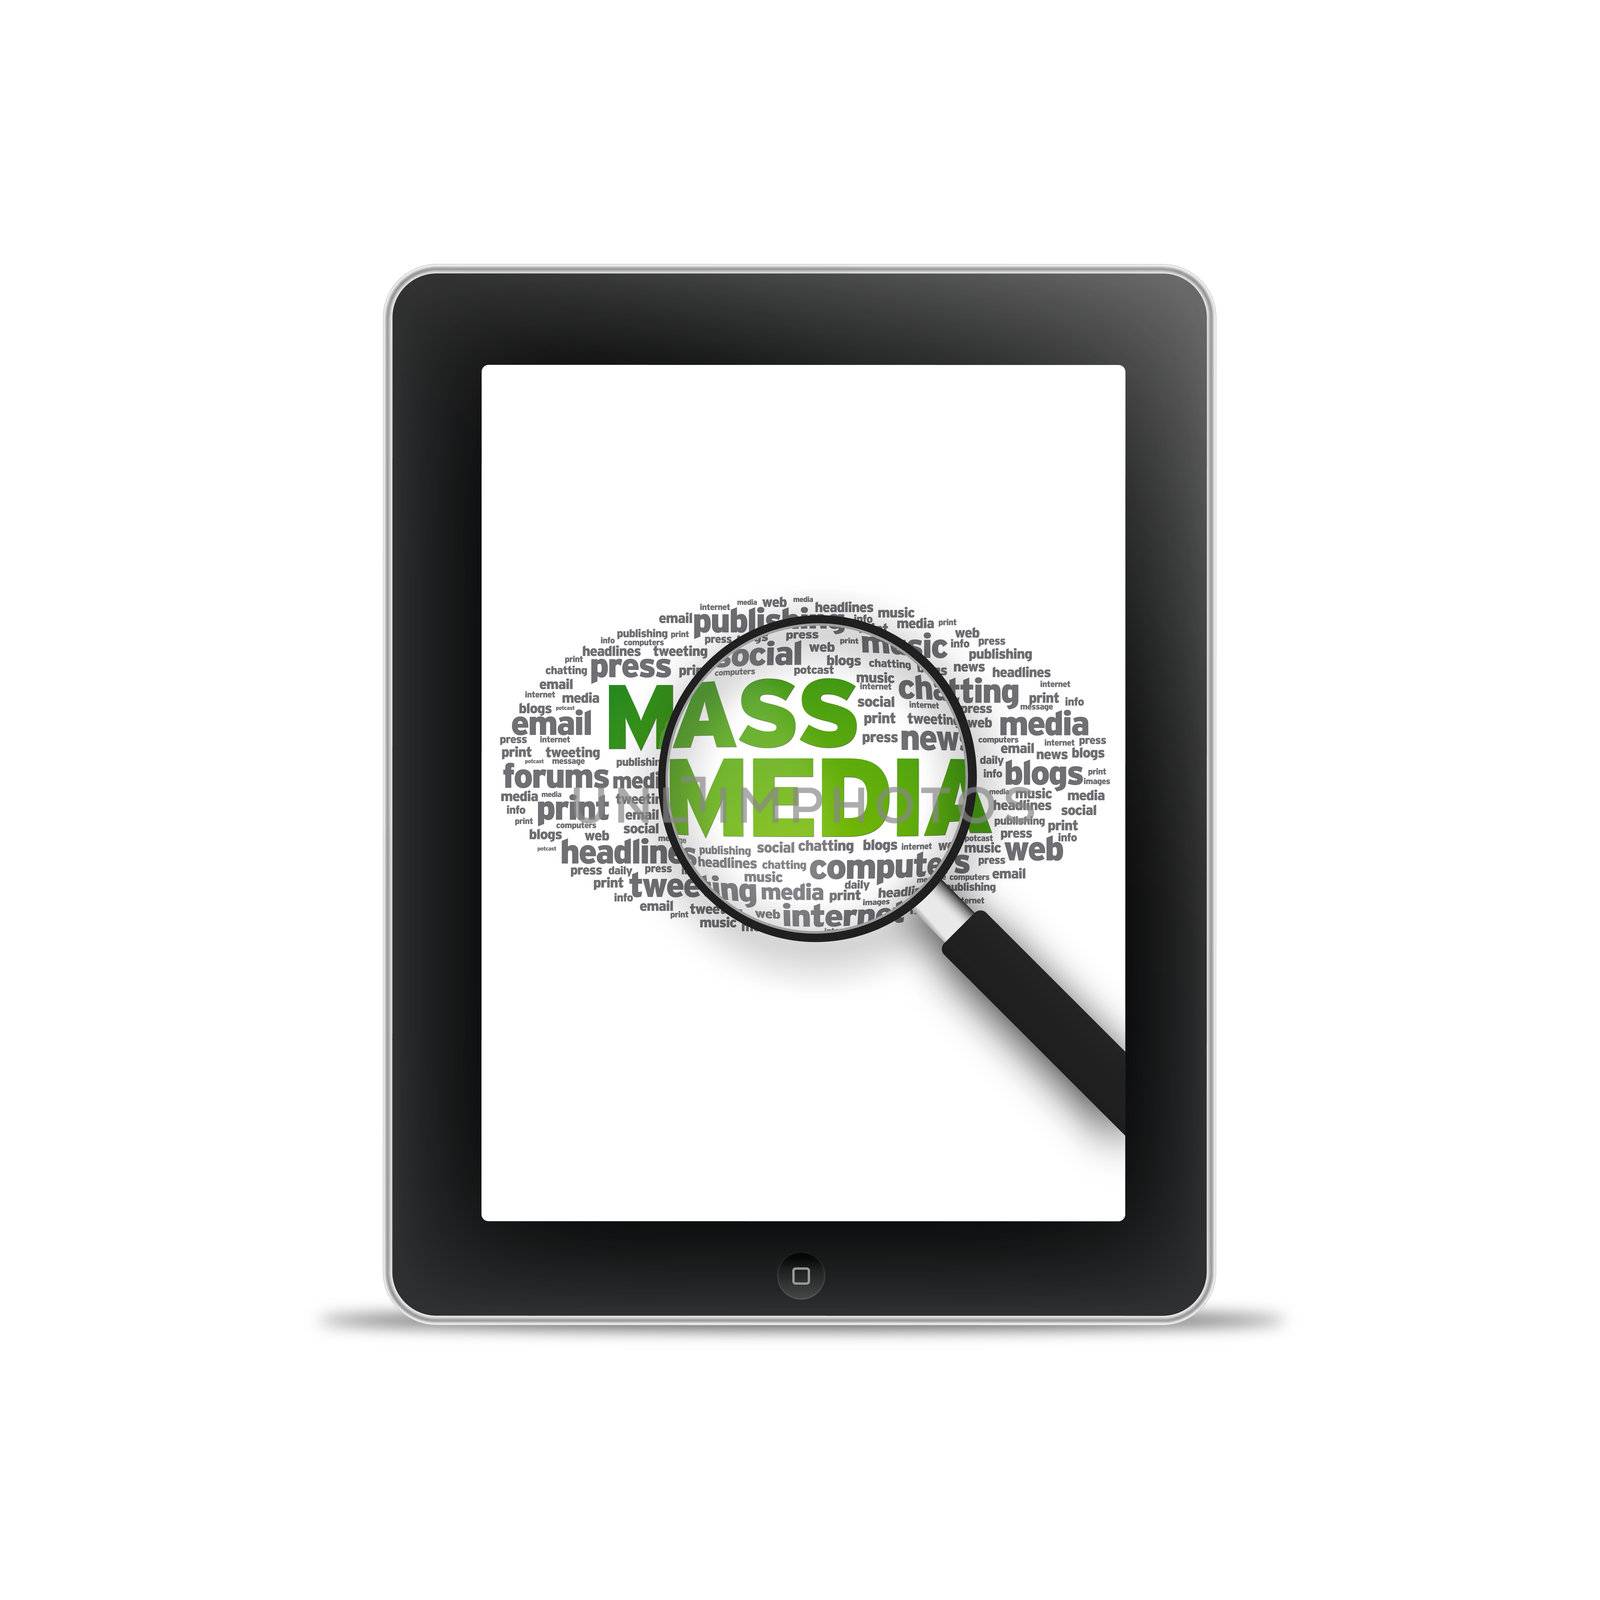 Tablet PC - Mass Media by kbuntu